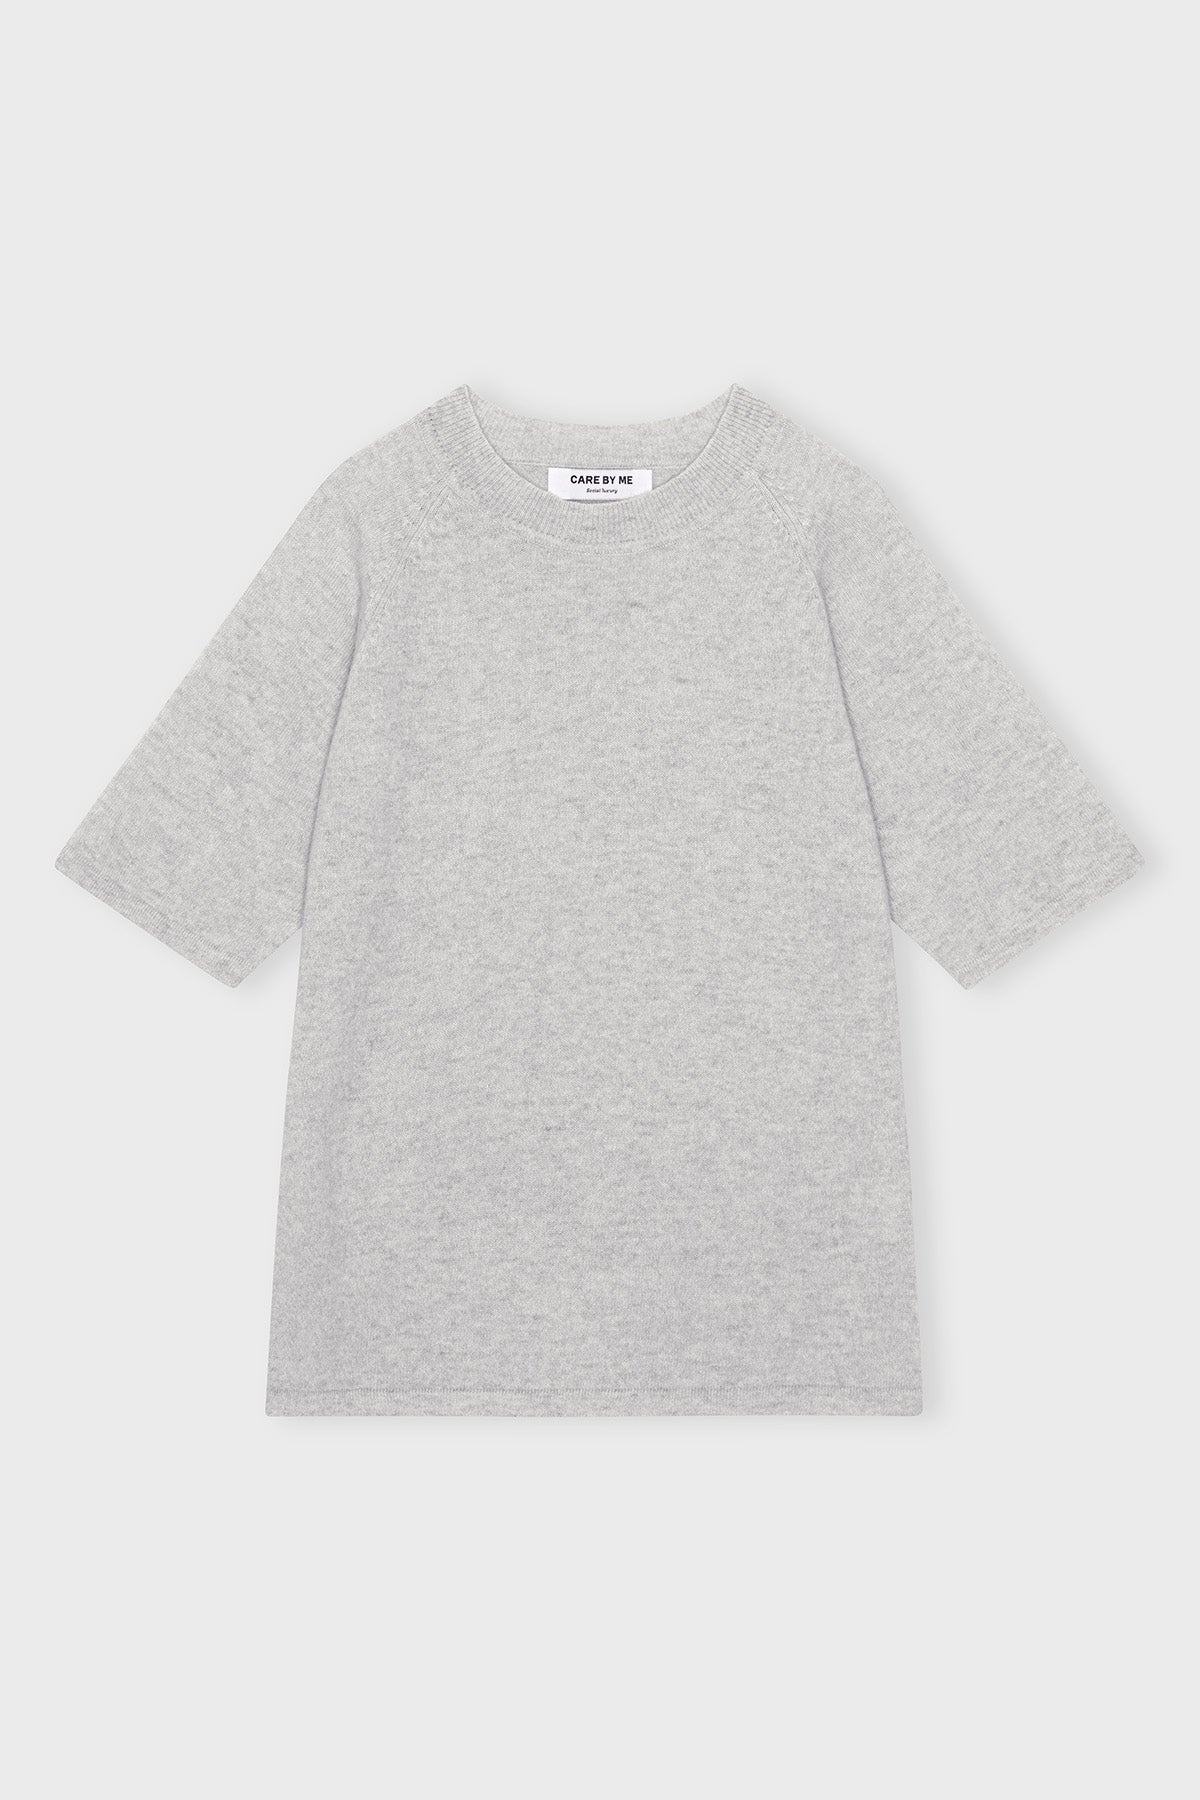 Lee T-Shirt Sweater